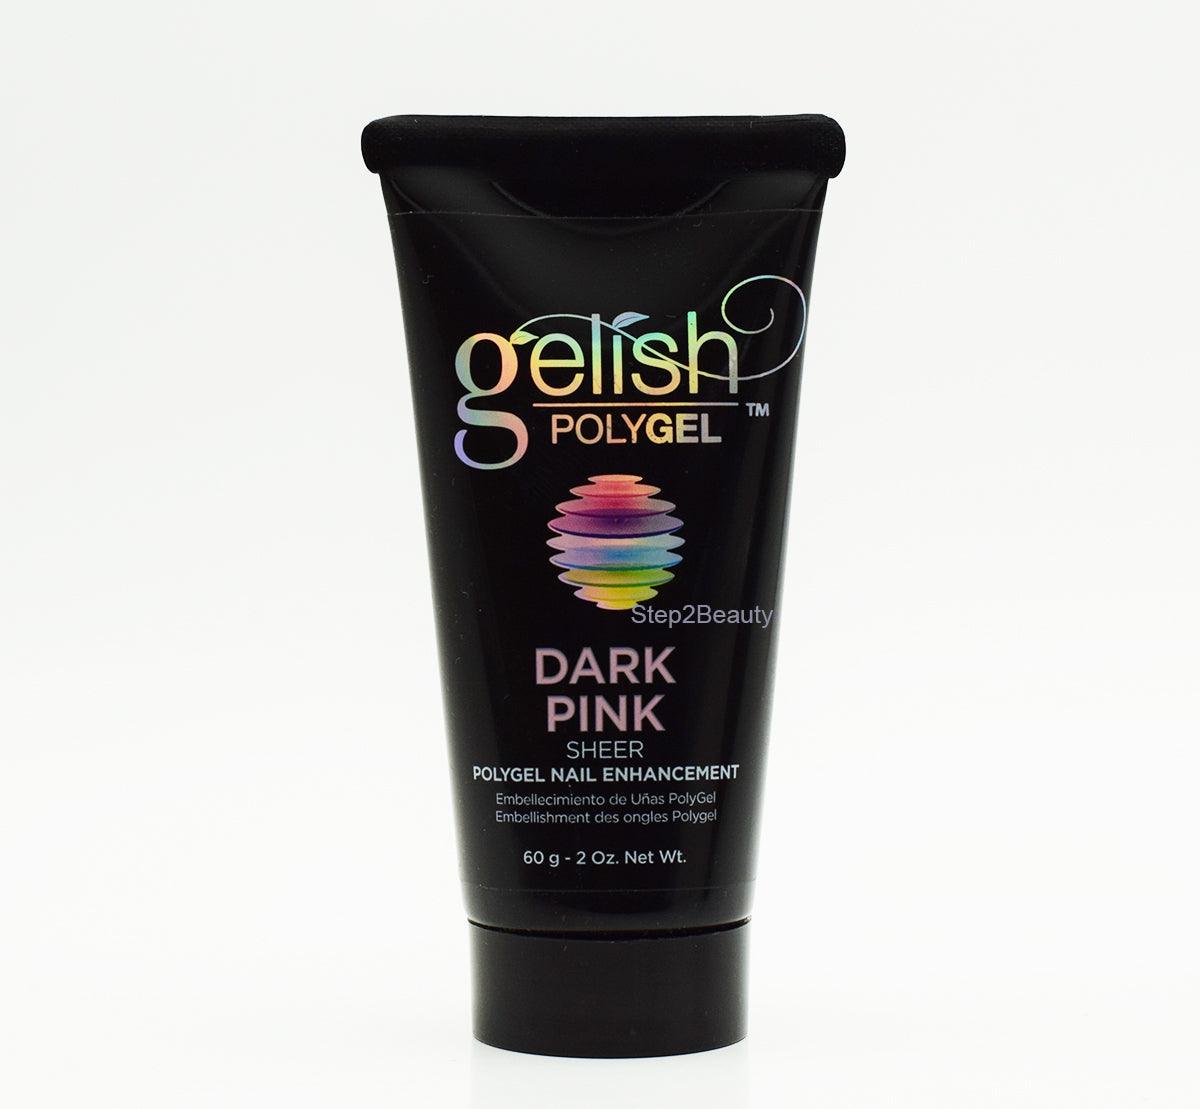 Gelish Polygel Nail Enhancement | Dark Pink Sheer 2 oz